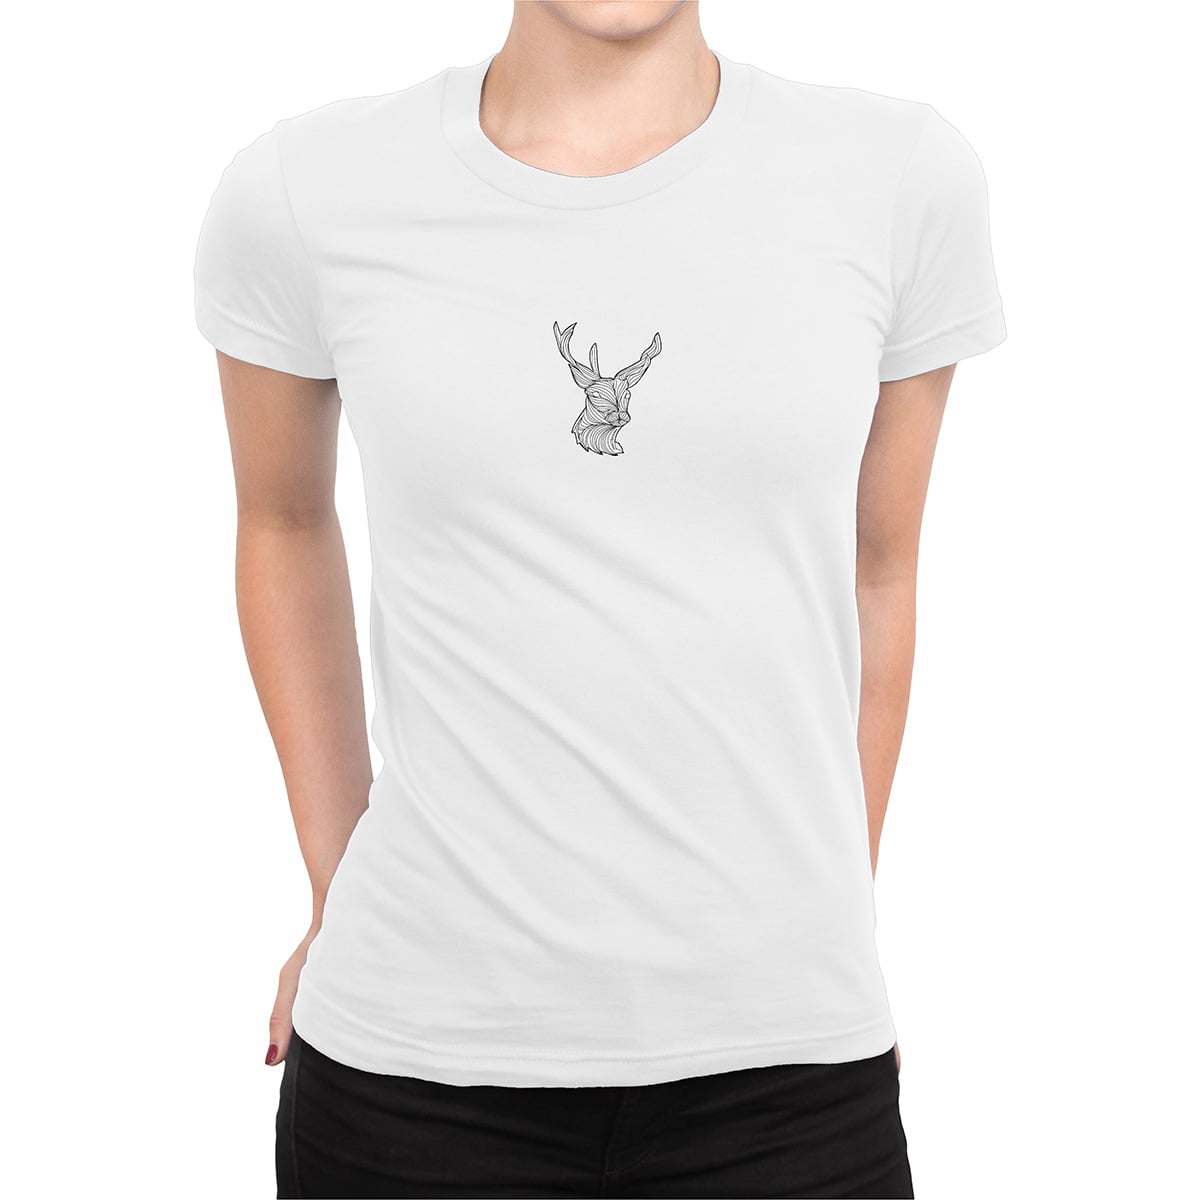 Orjinal geyik mandala siyah fxsca2194c kadin tshirt beyaz orta kucuk - geyik mandala kadın t-shirt - figurex